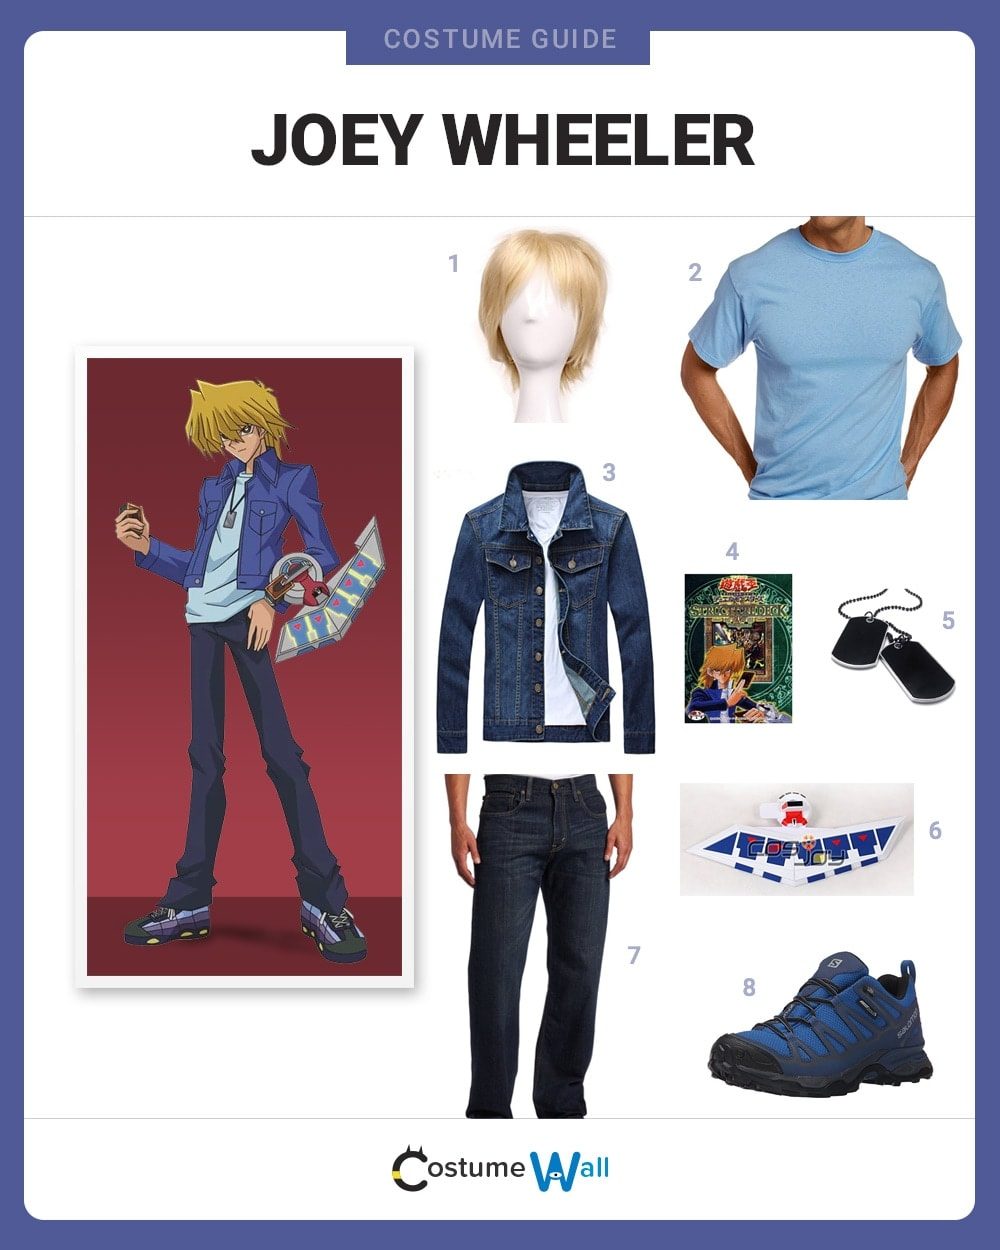 Joey Wheeler Costume Guide